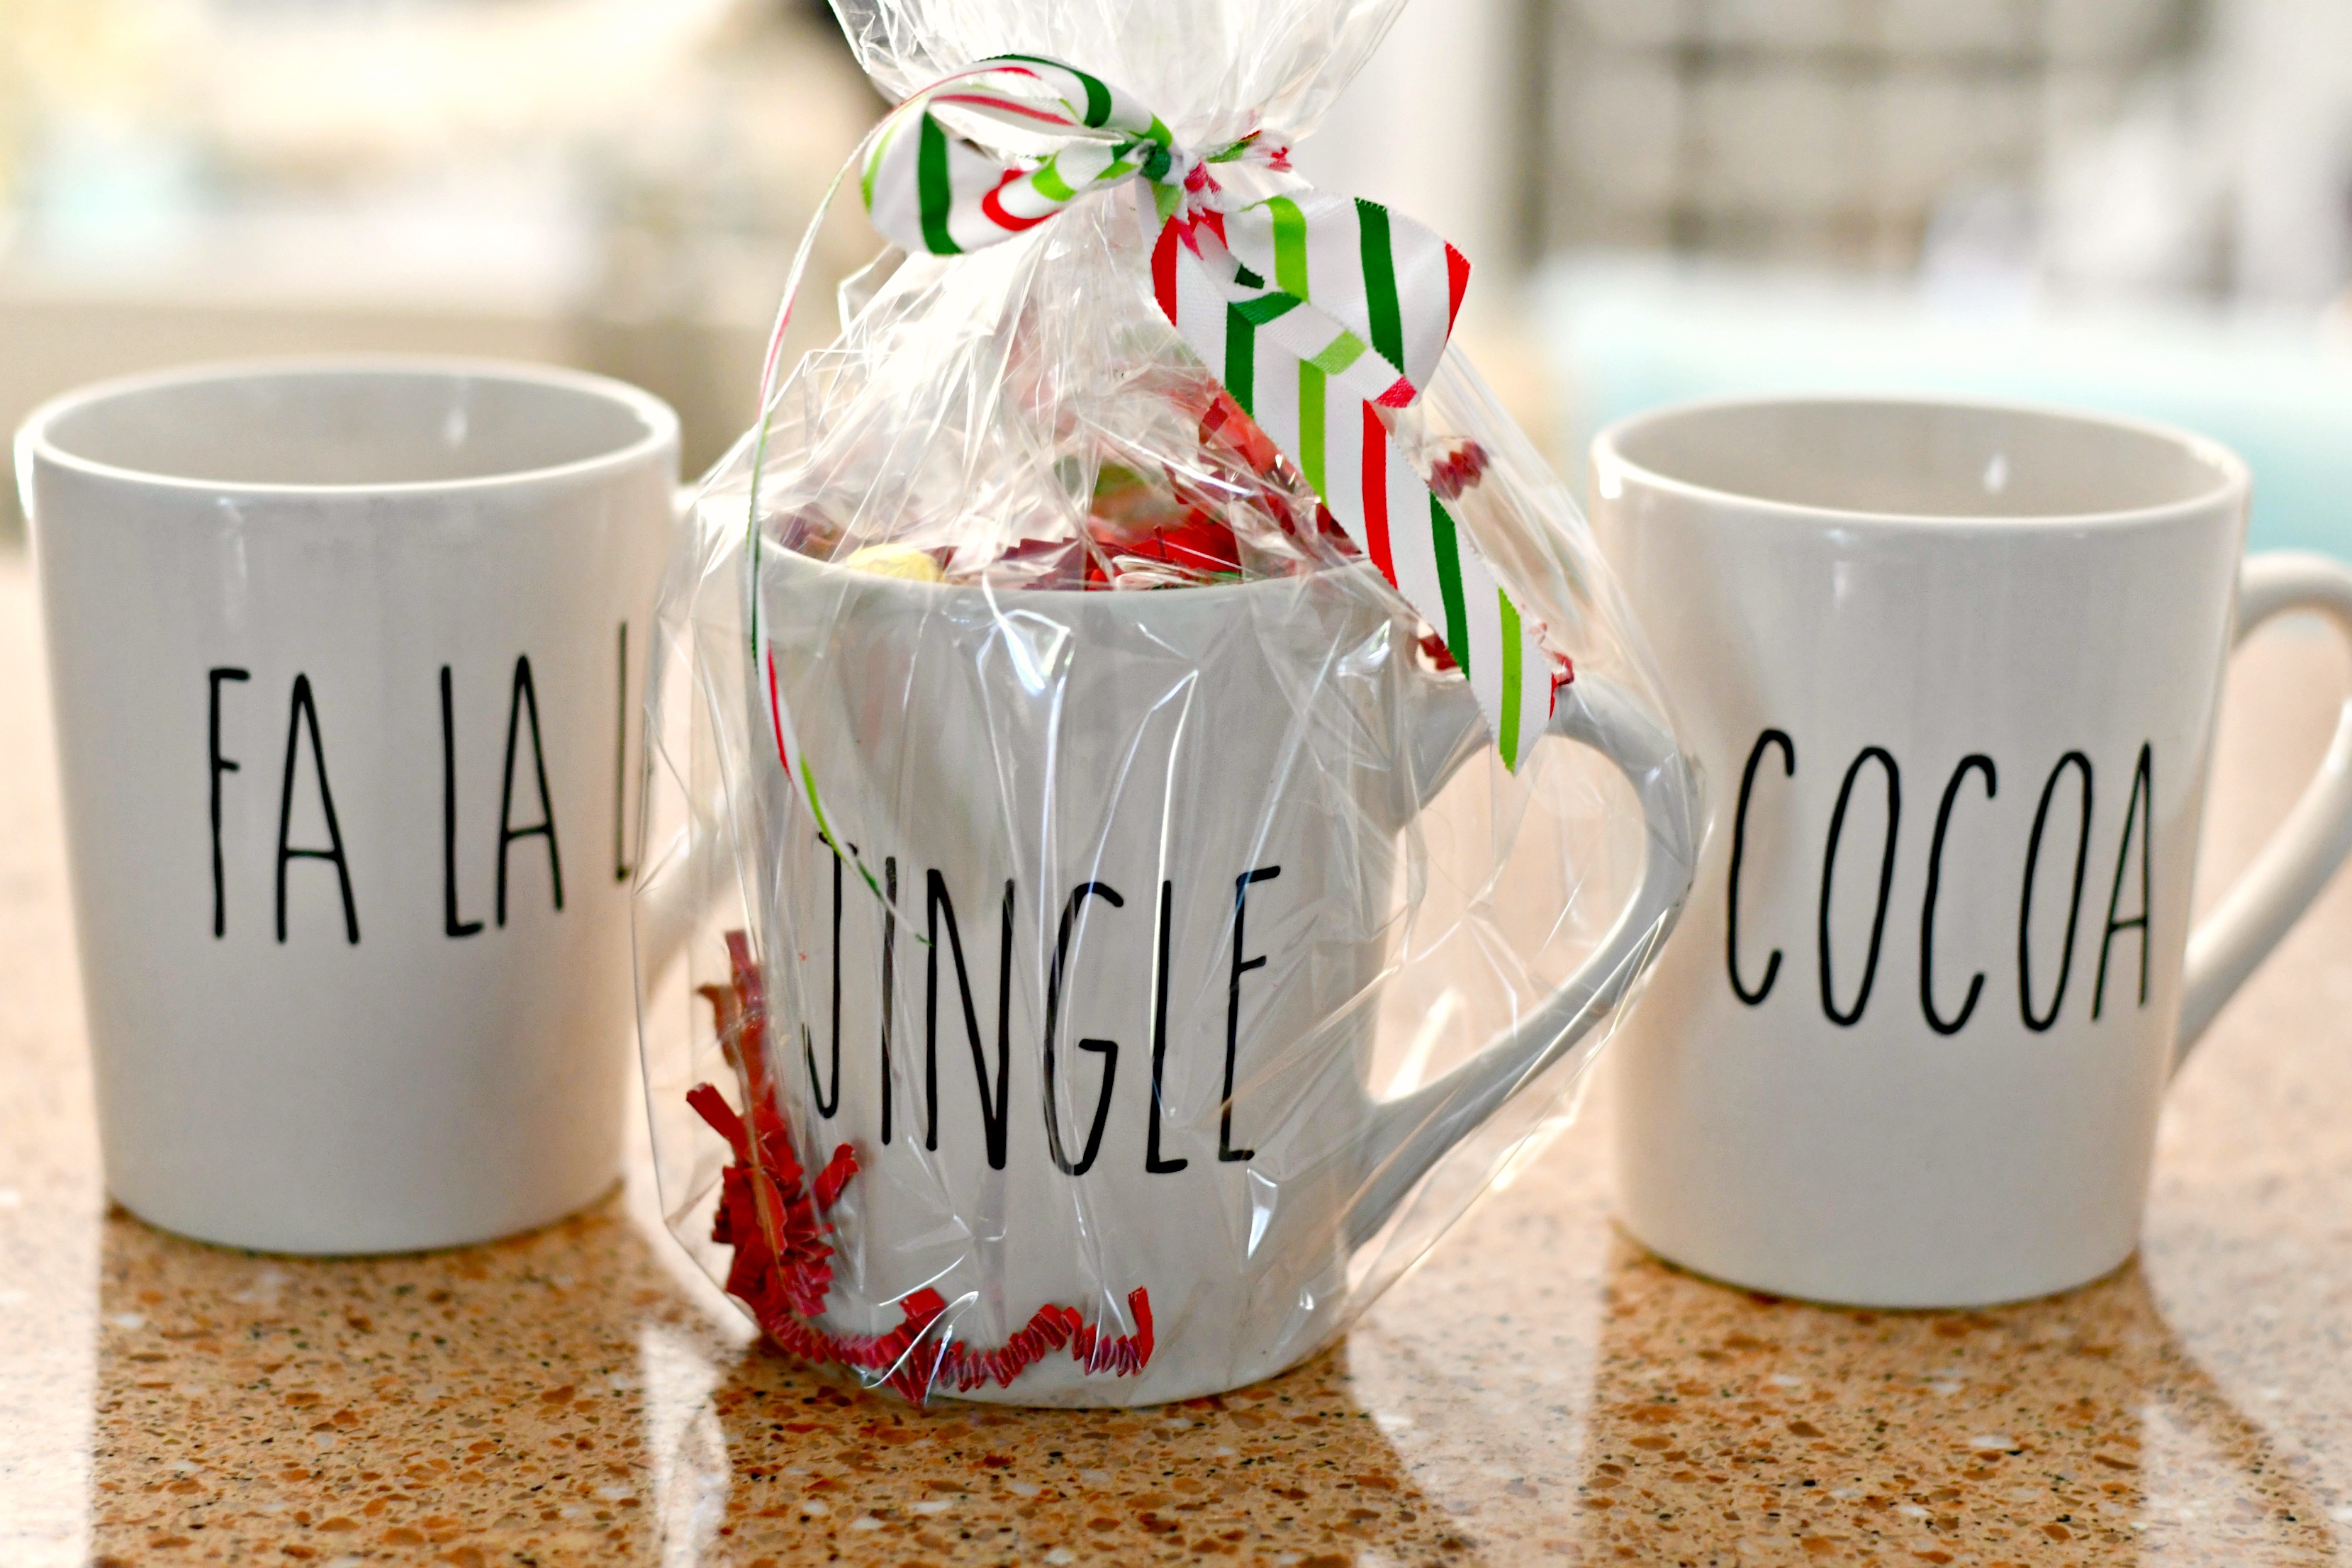 cellophane packaging filled mugs as gifts